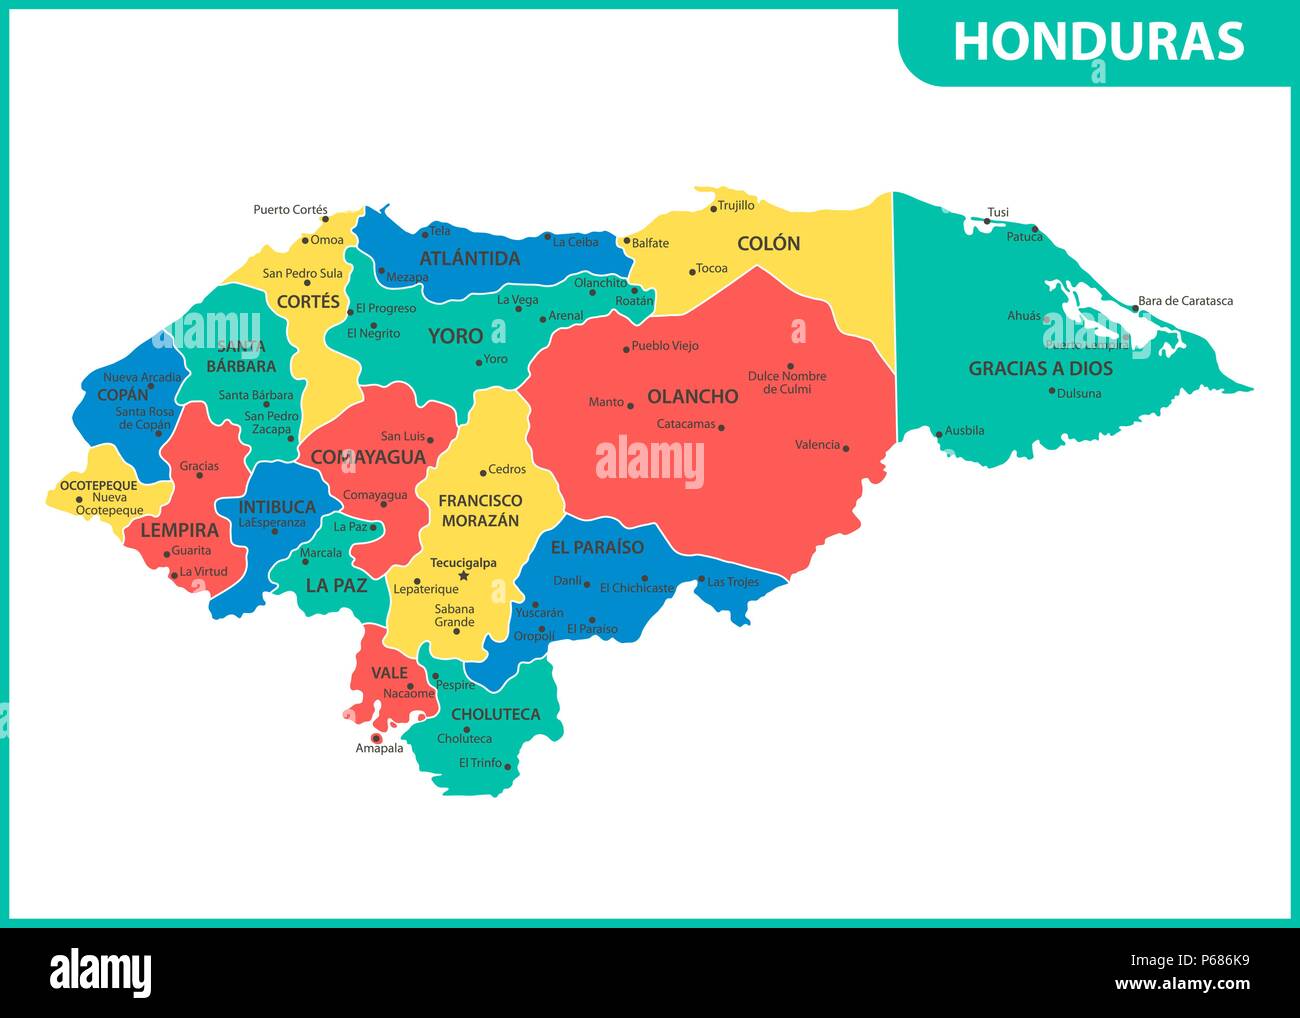 Honduras Map With Capital